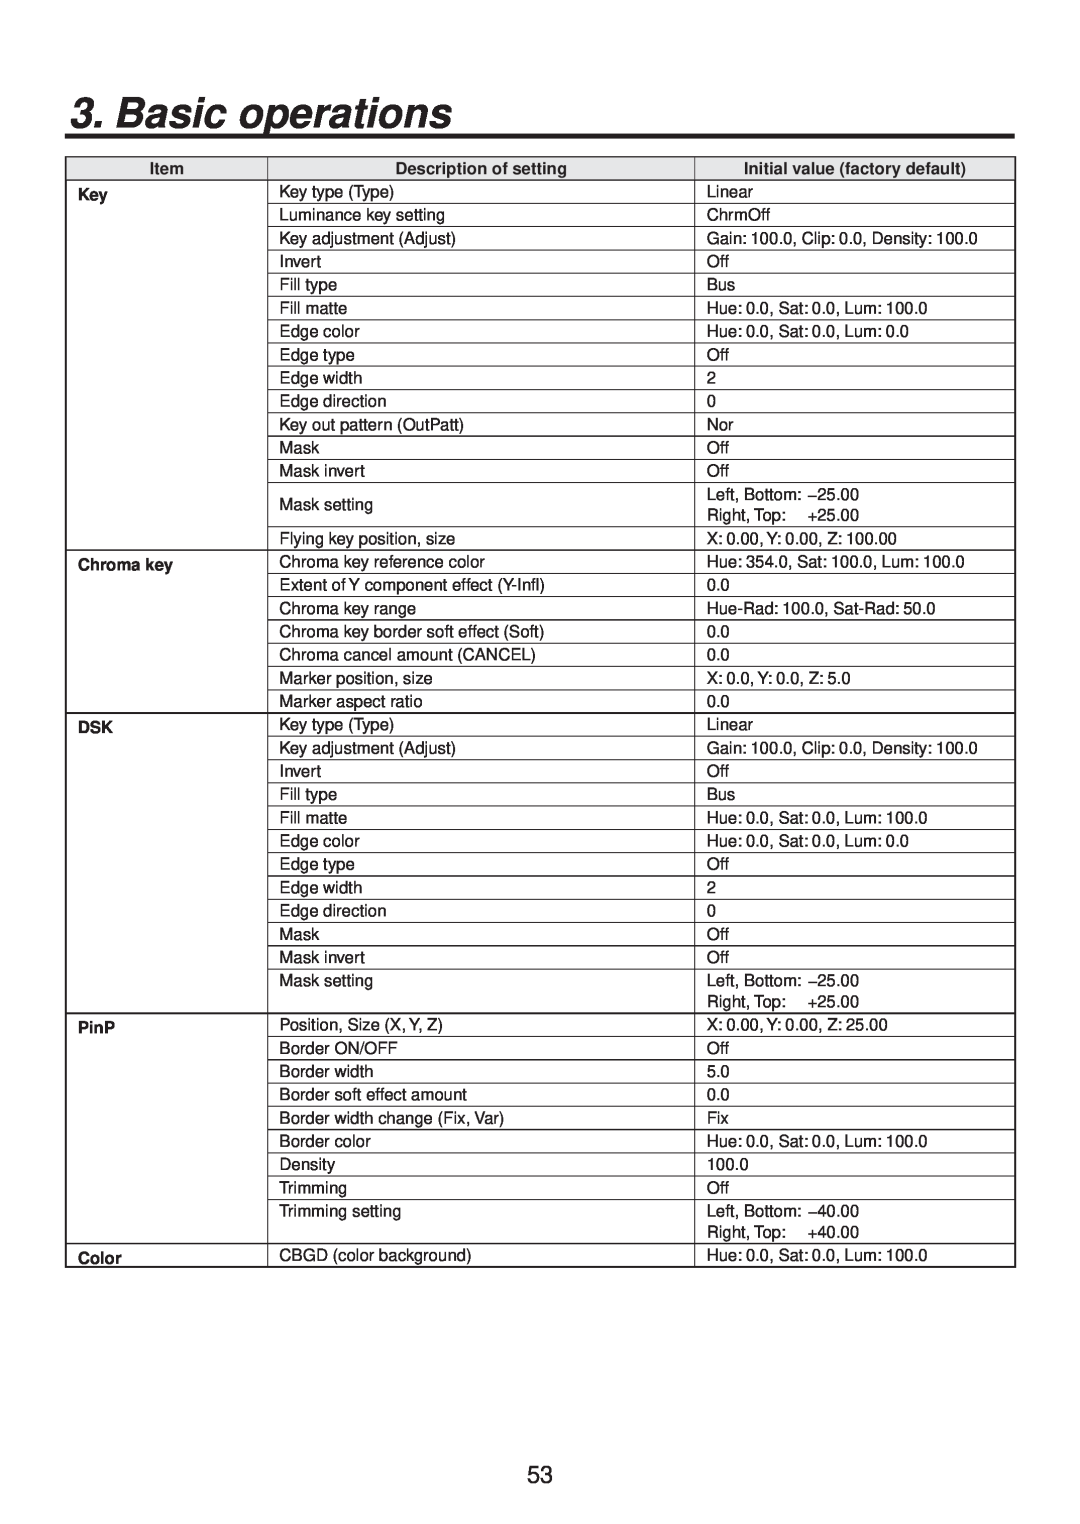 Panasonic AV-HS400AN Basic operations, Description of setting, Initial value factory default, Chroma key, PinP, Color 